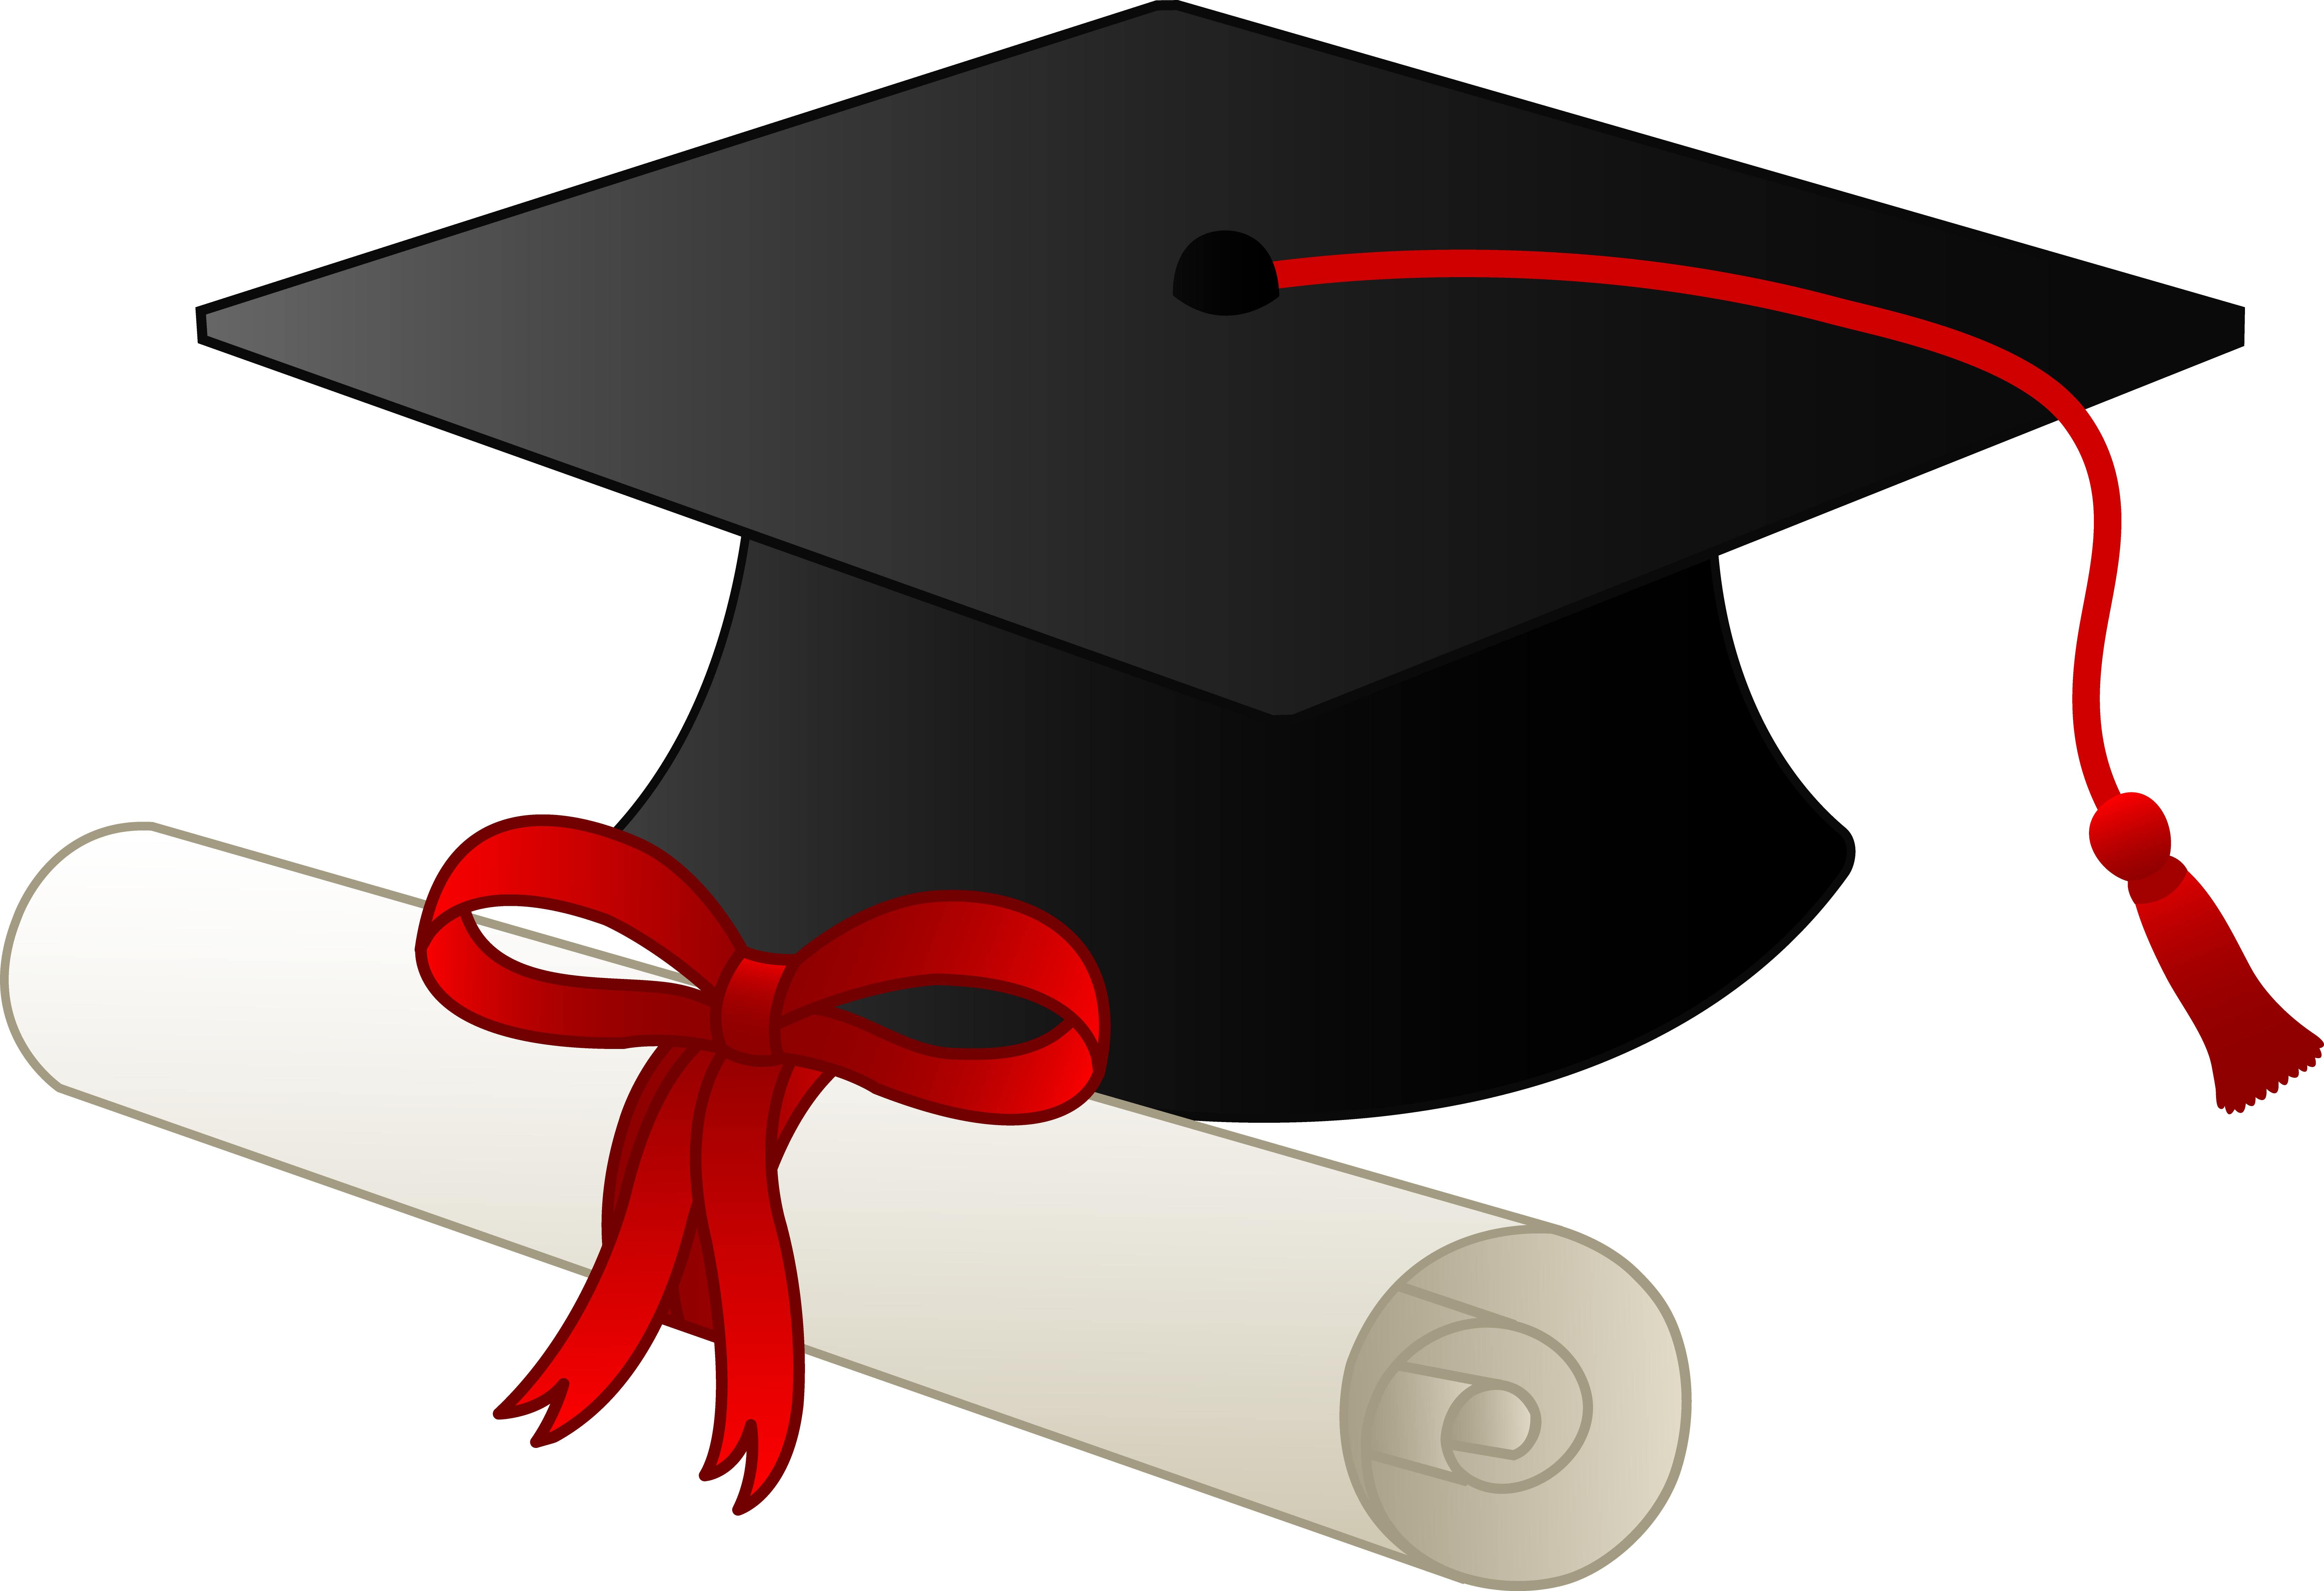 Graduation diploma clipart